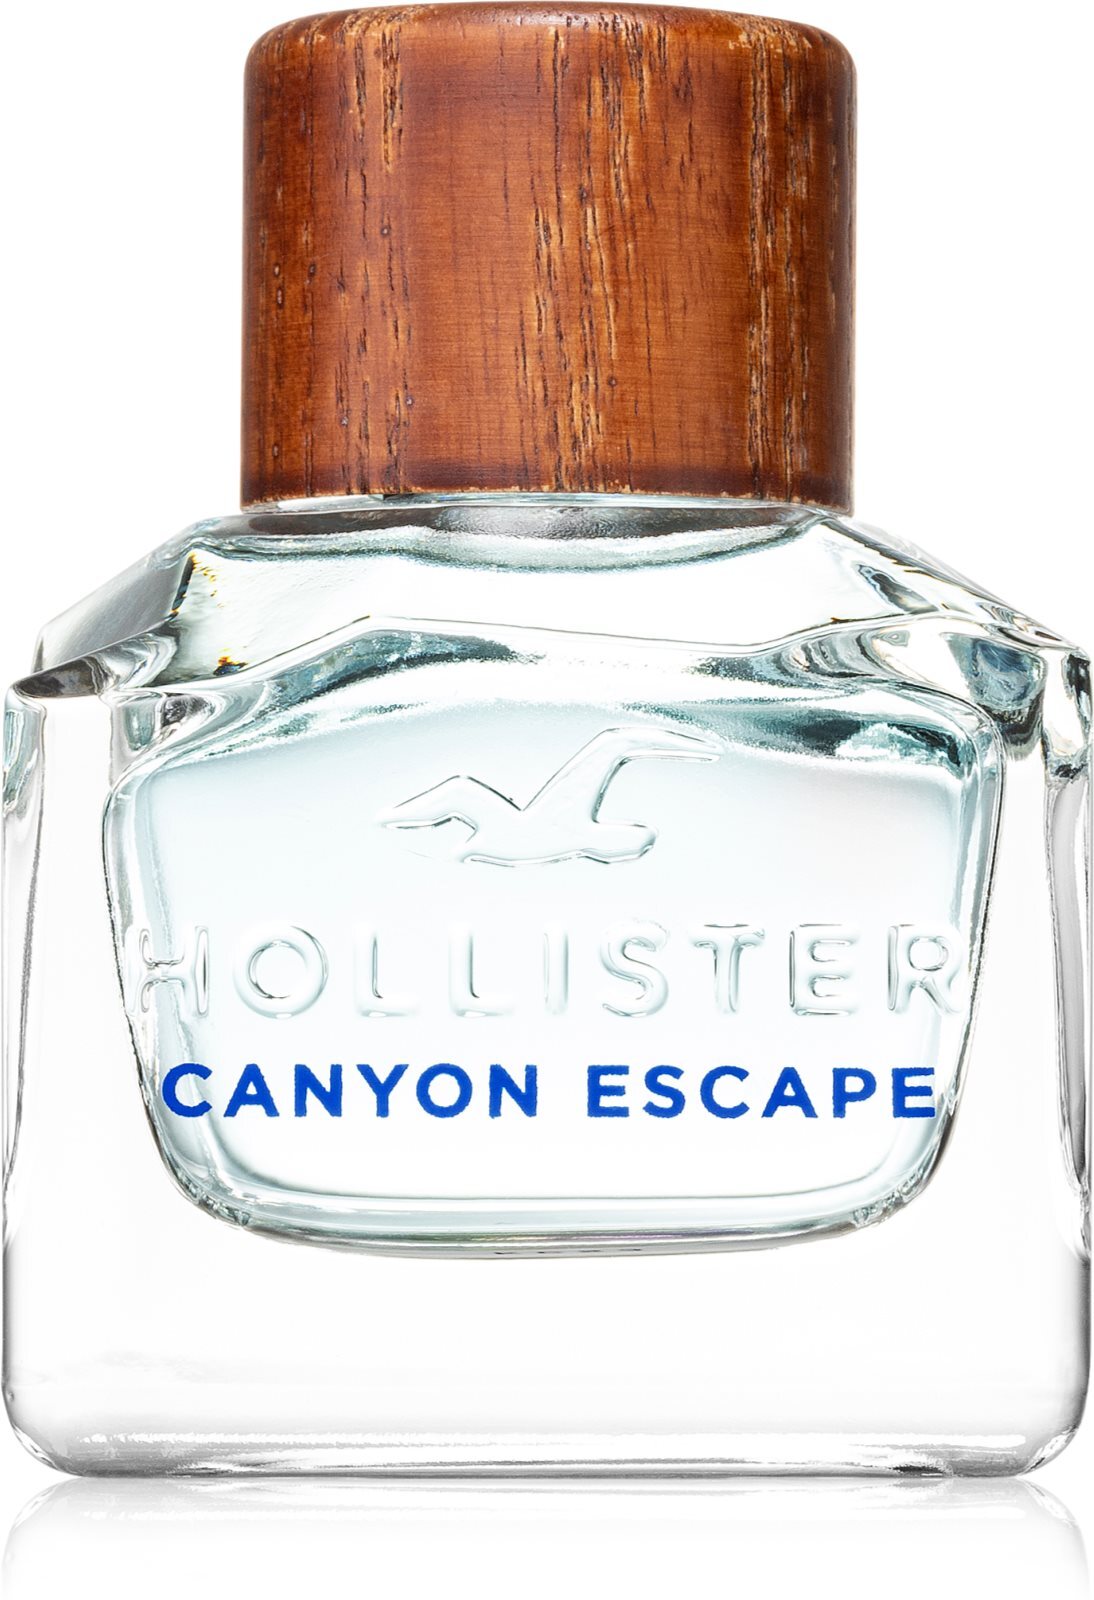 Hollister canyon escape. Hollister Canyon Escape жен парфюмерная вода 30мл, шт, 000067025, 20%. Hollister Canyon. Hollister Canyon Sky for her. Hollister Canyon Crush her.